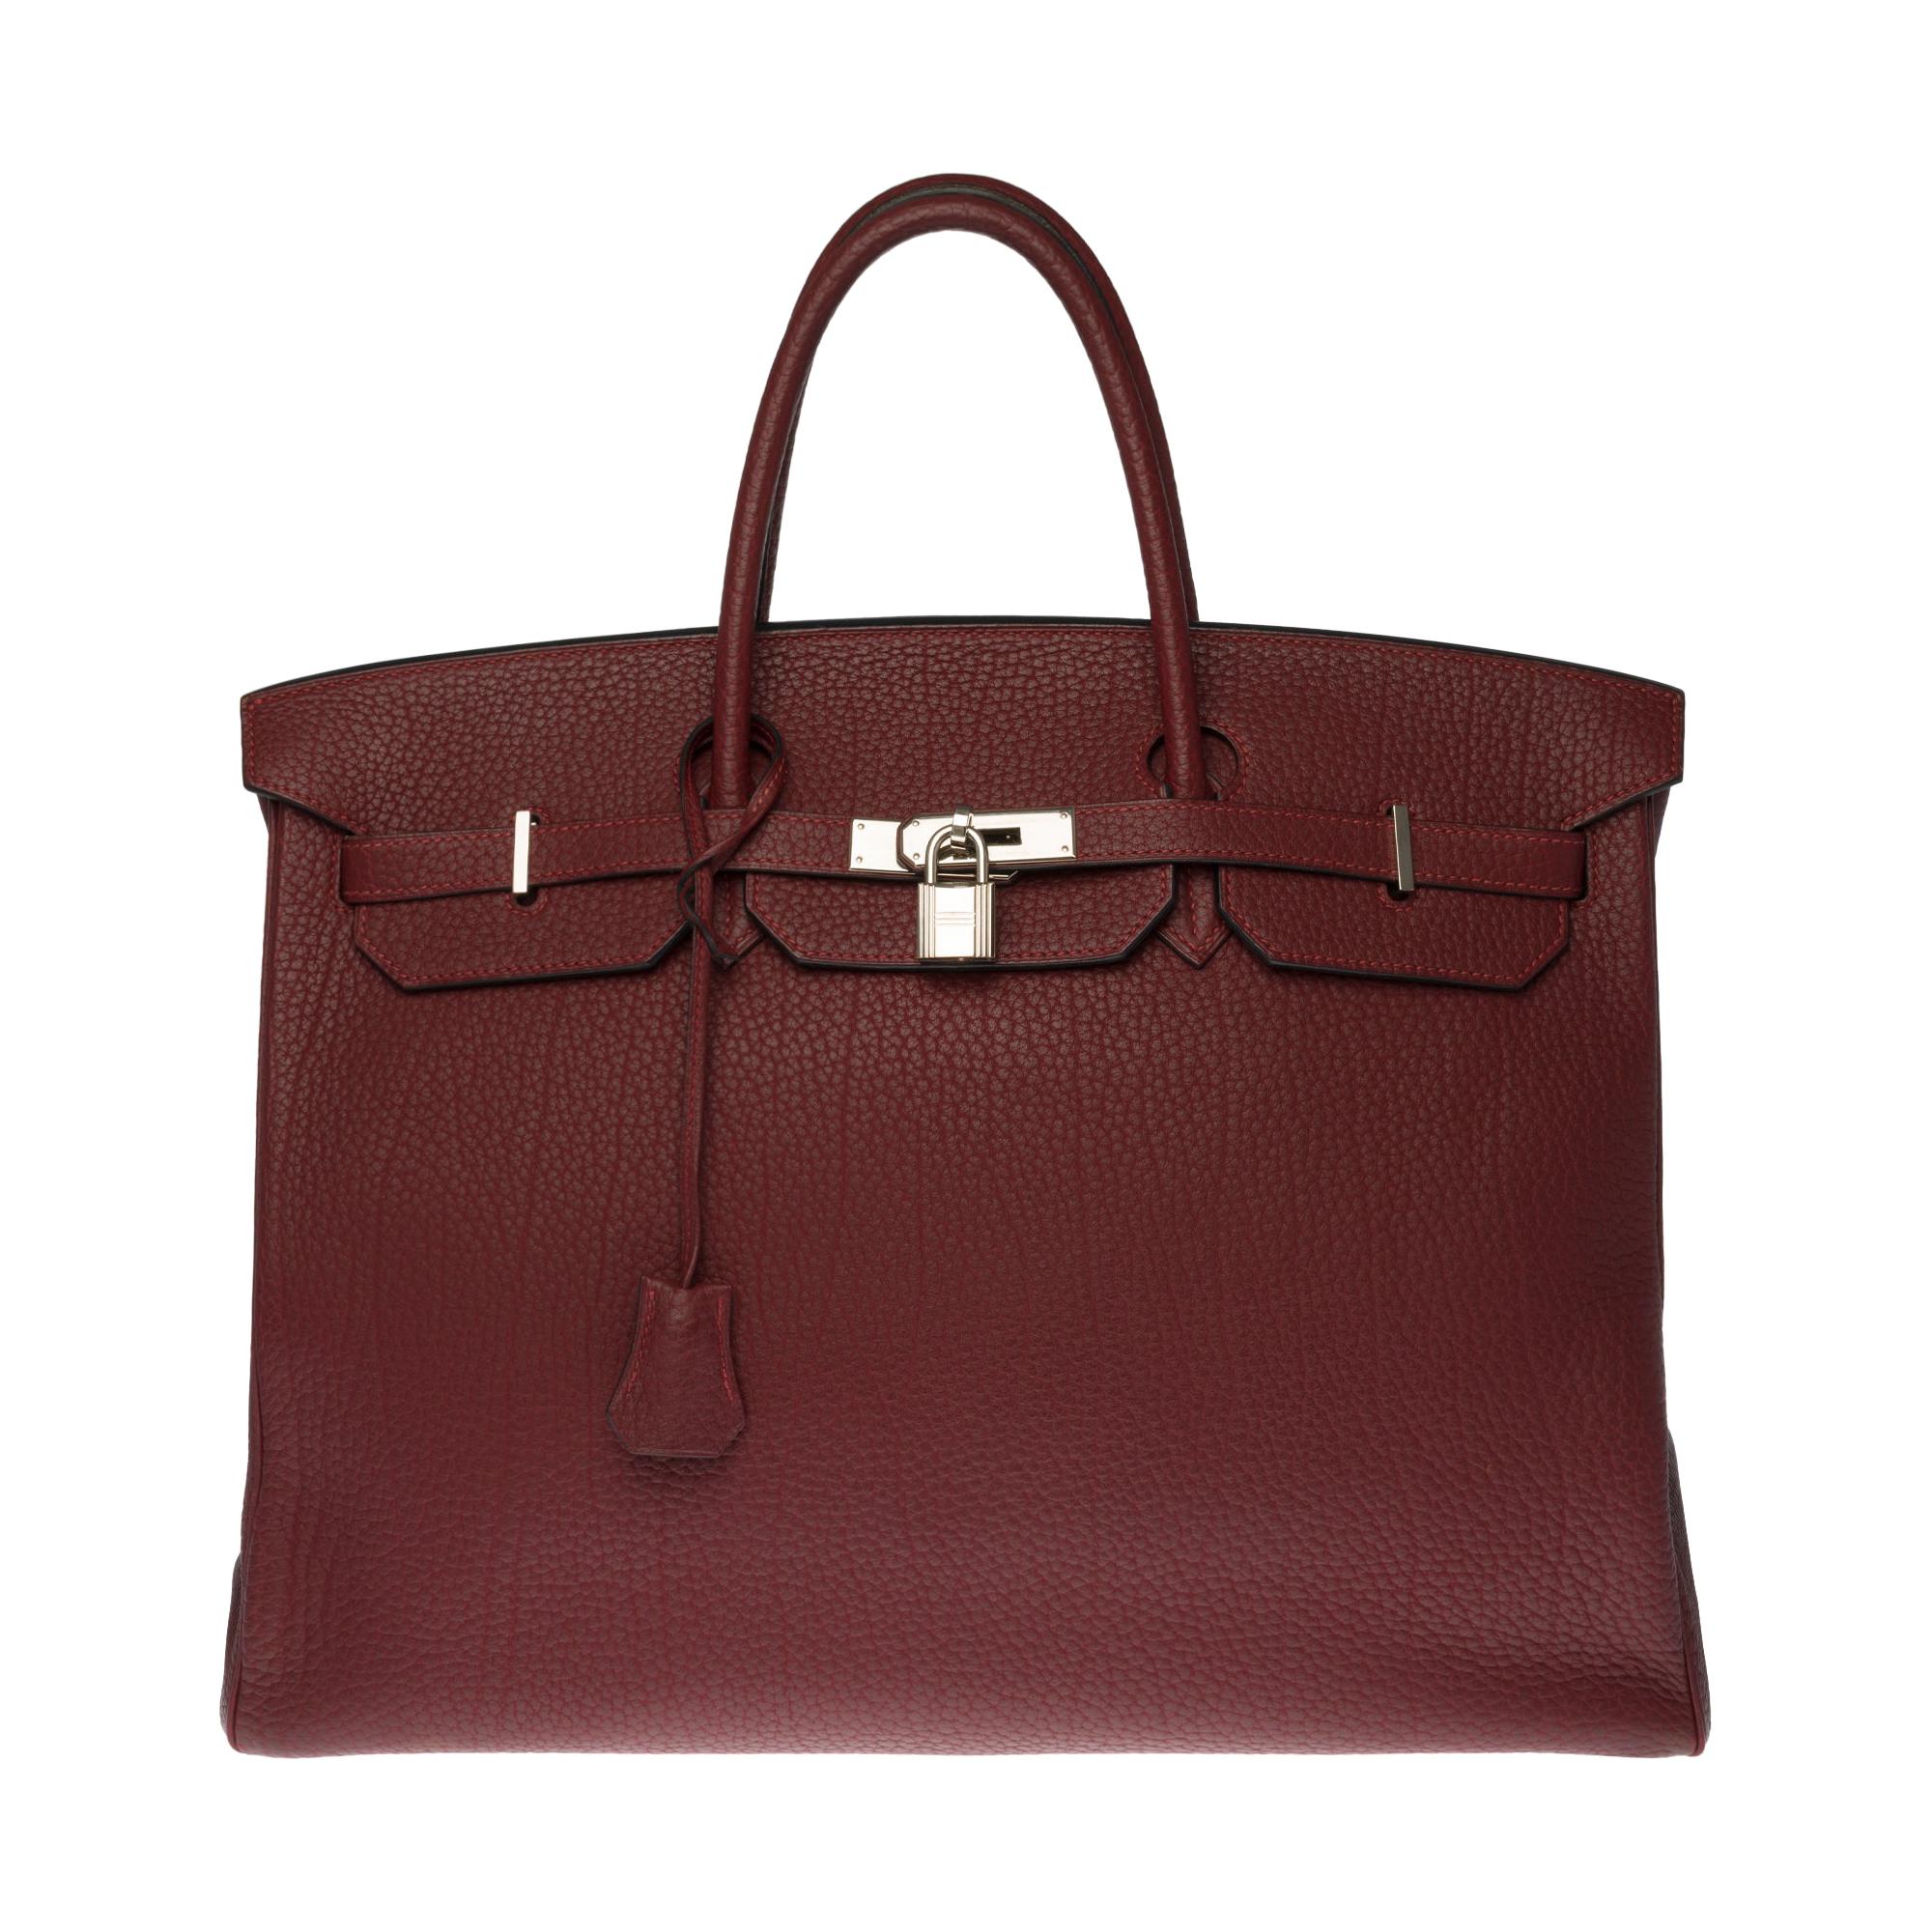 Stunning Hermes Birkin 40cm handbag in burgundy Fjord leather, silver hardware